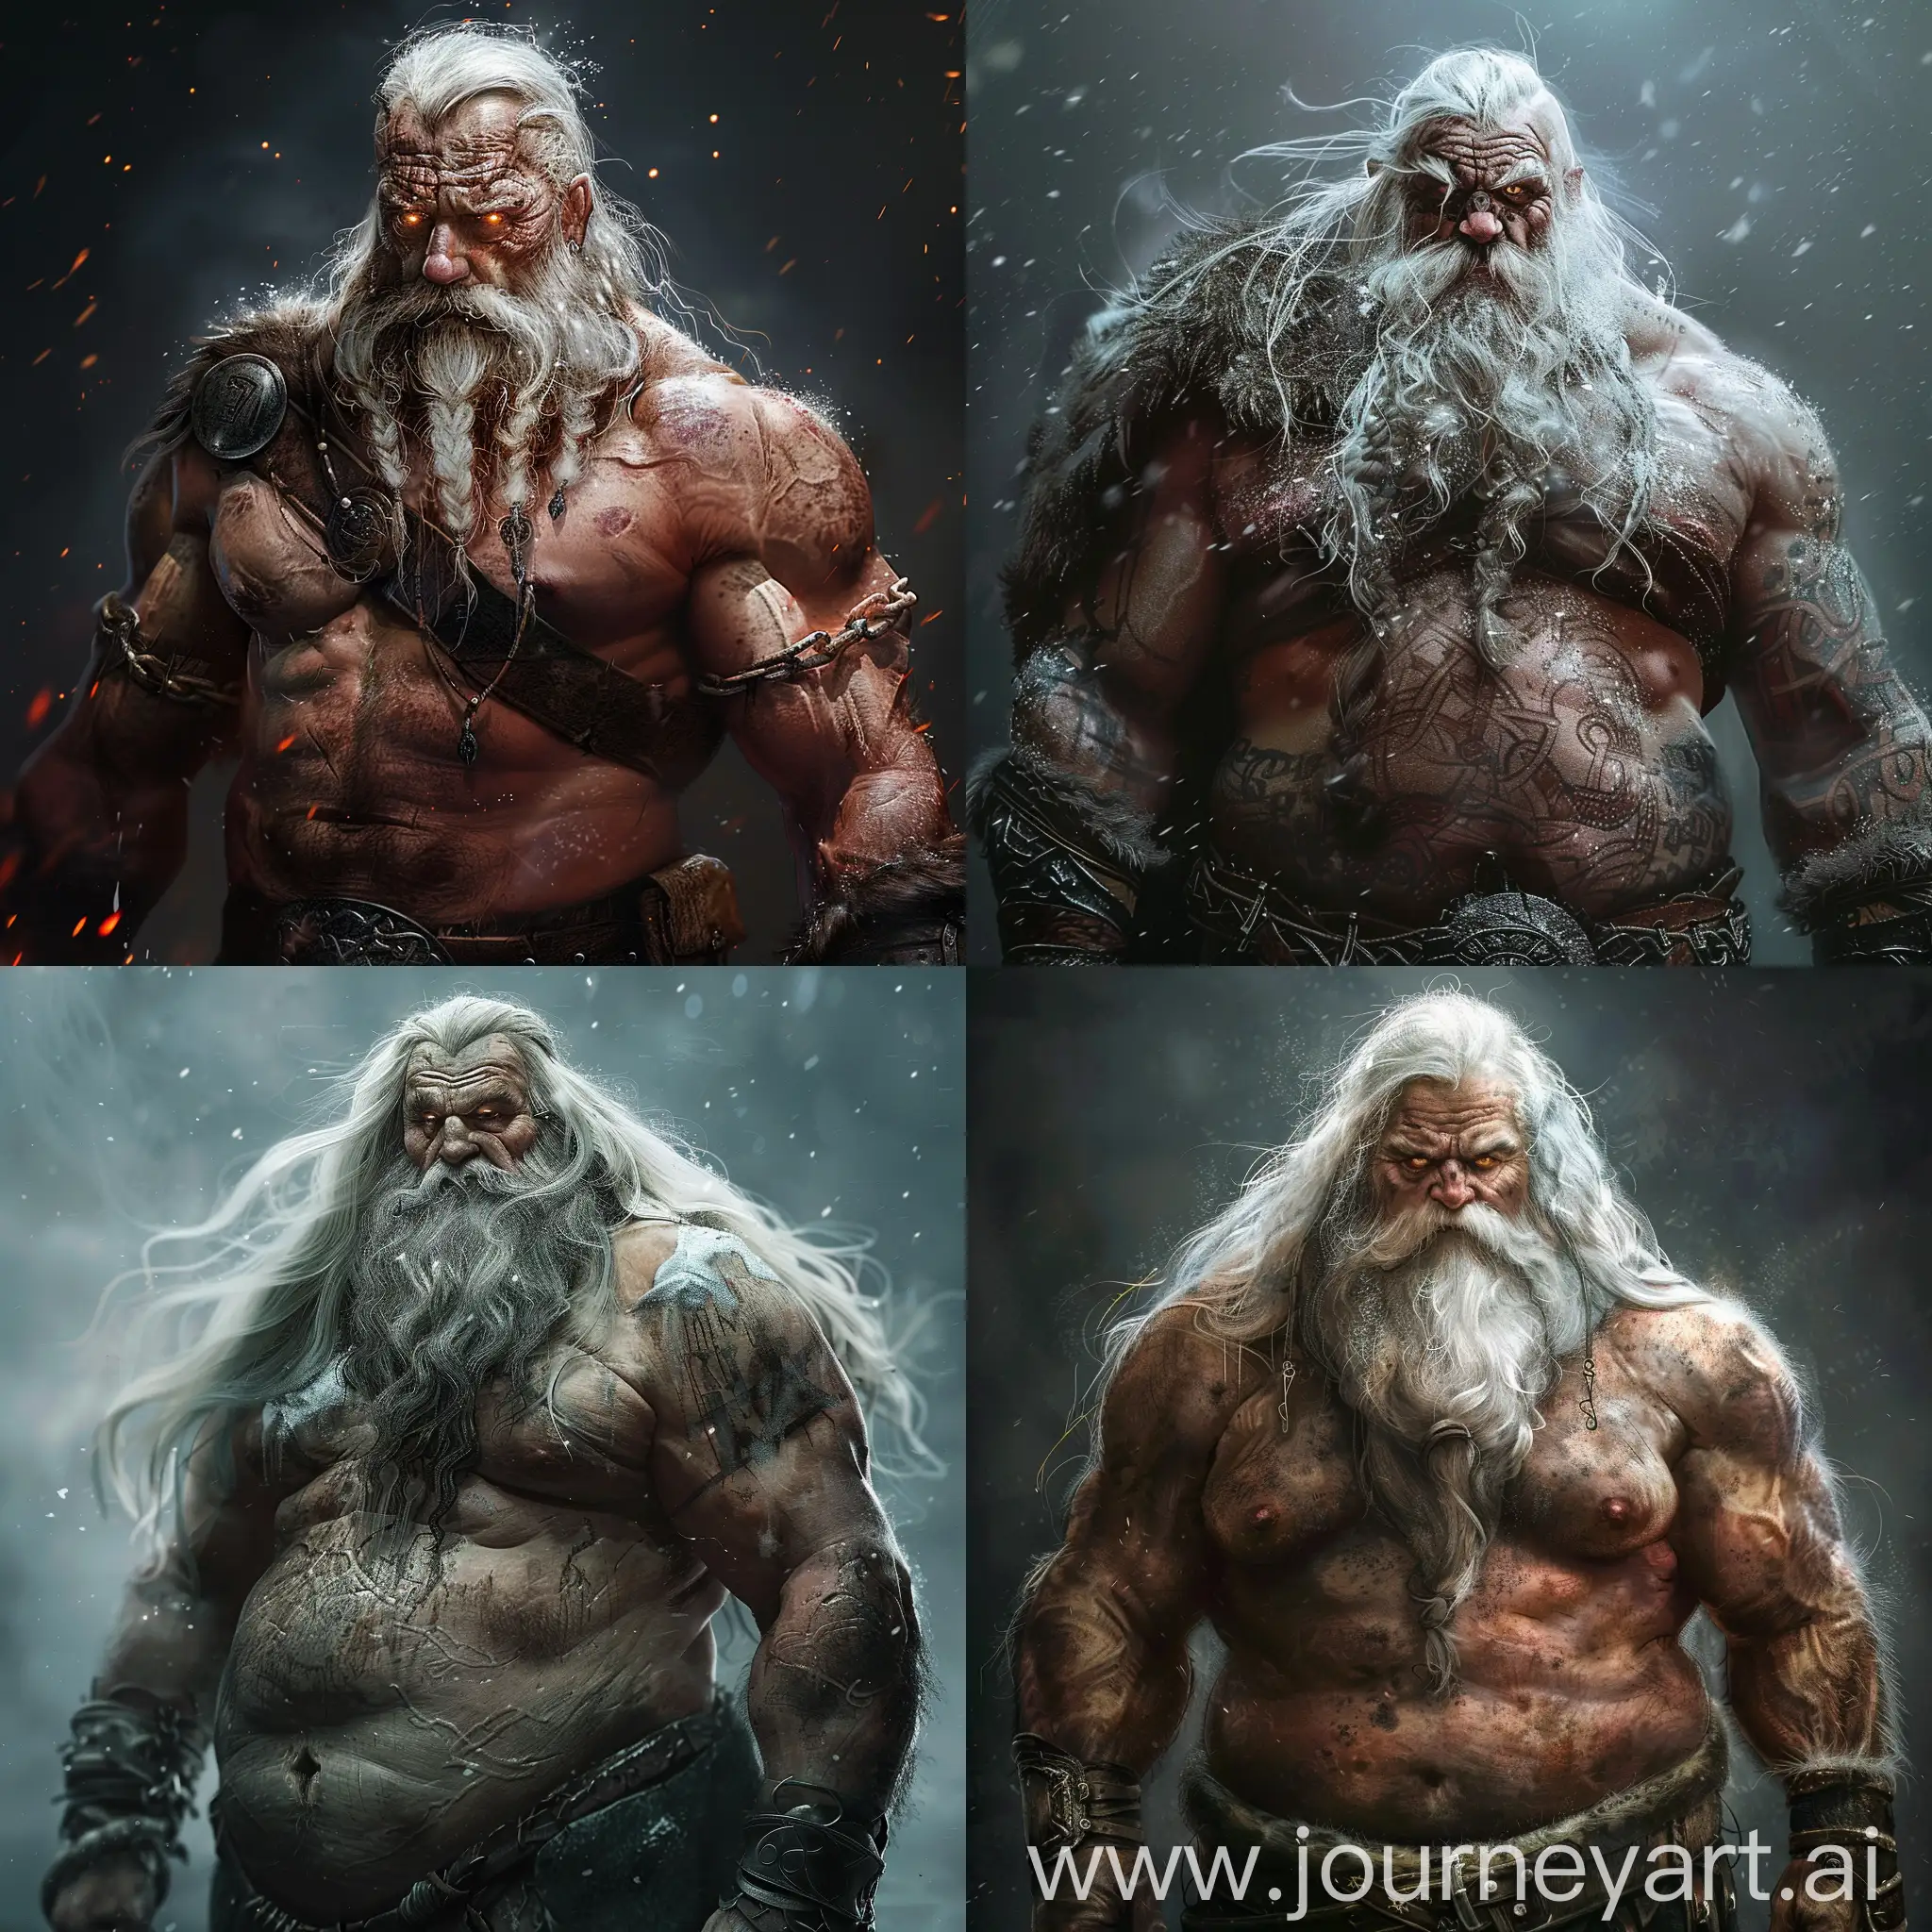 Aged-Viking-King-with-Fiery-Gaze-Realistic-Dark-Fantasy-Portrait